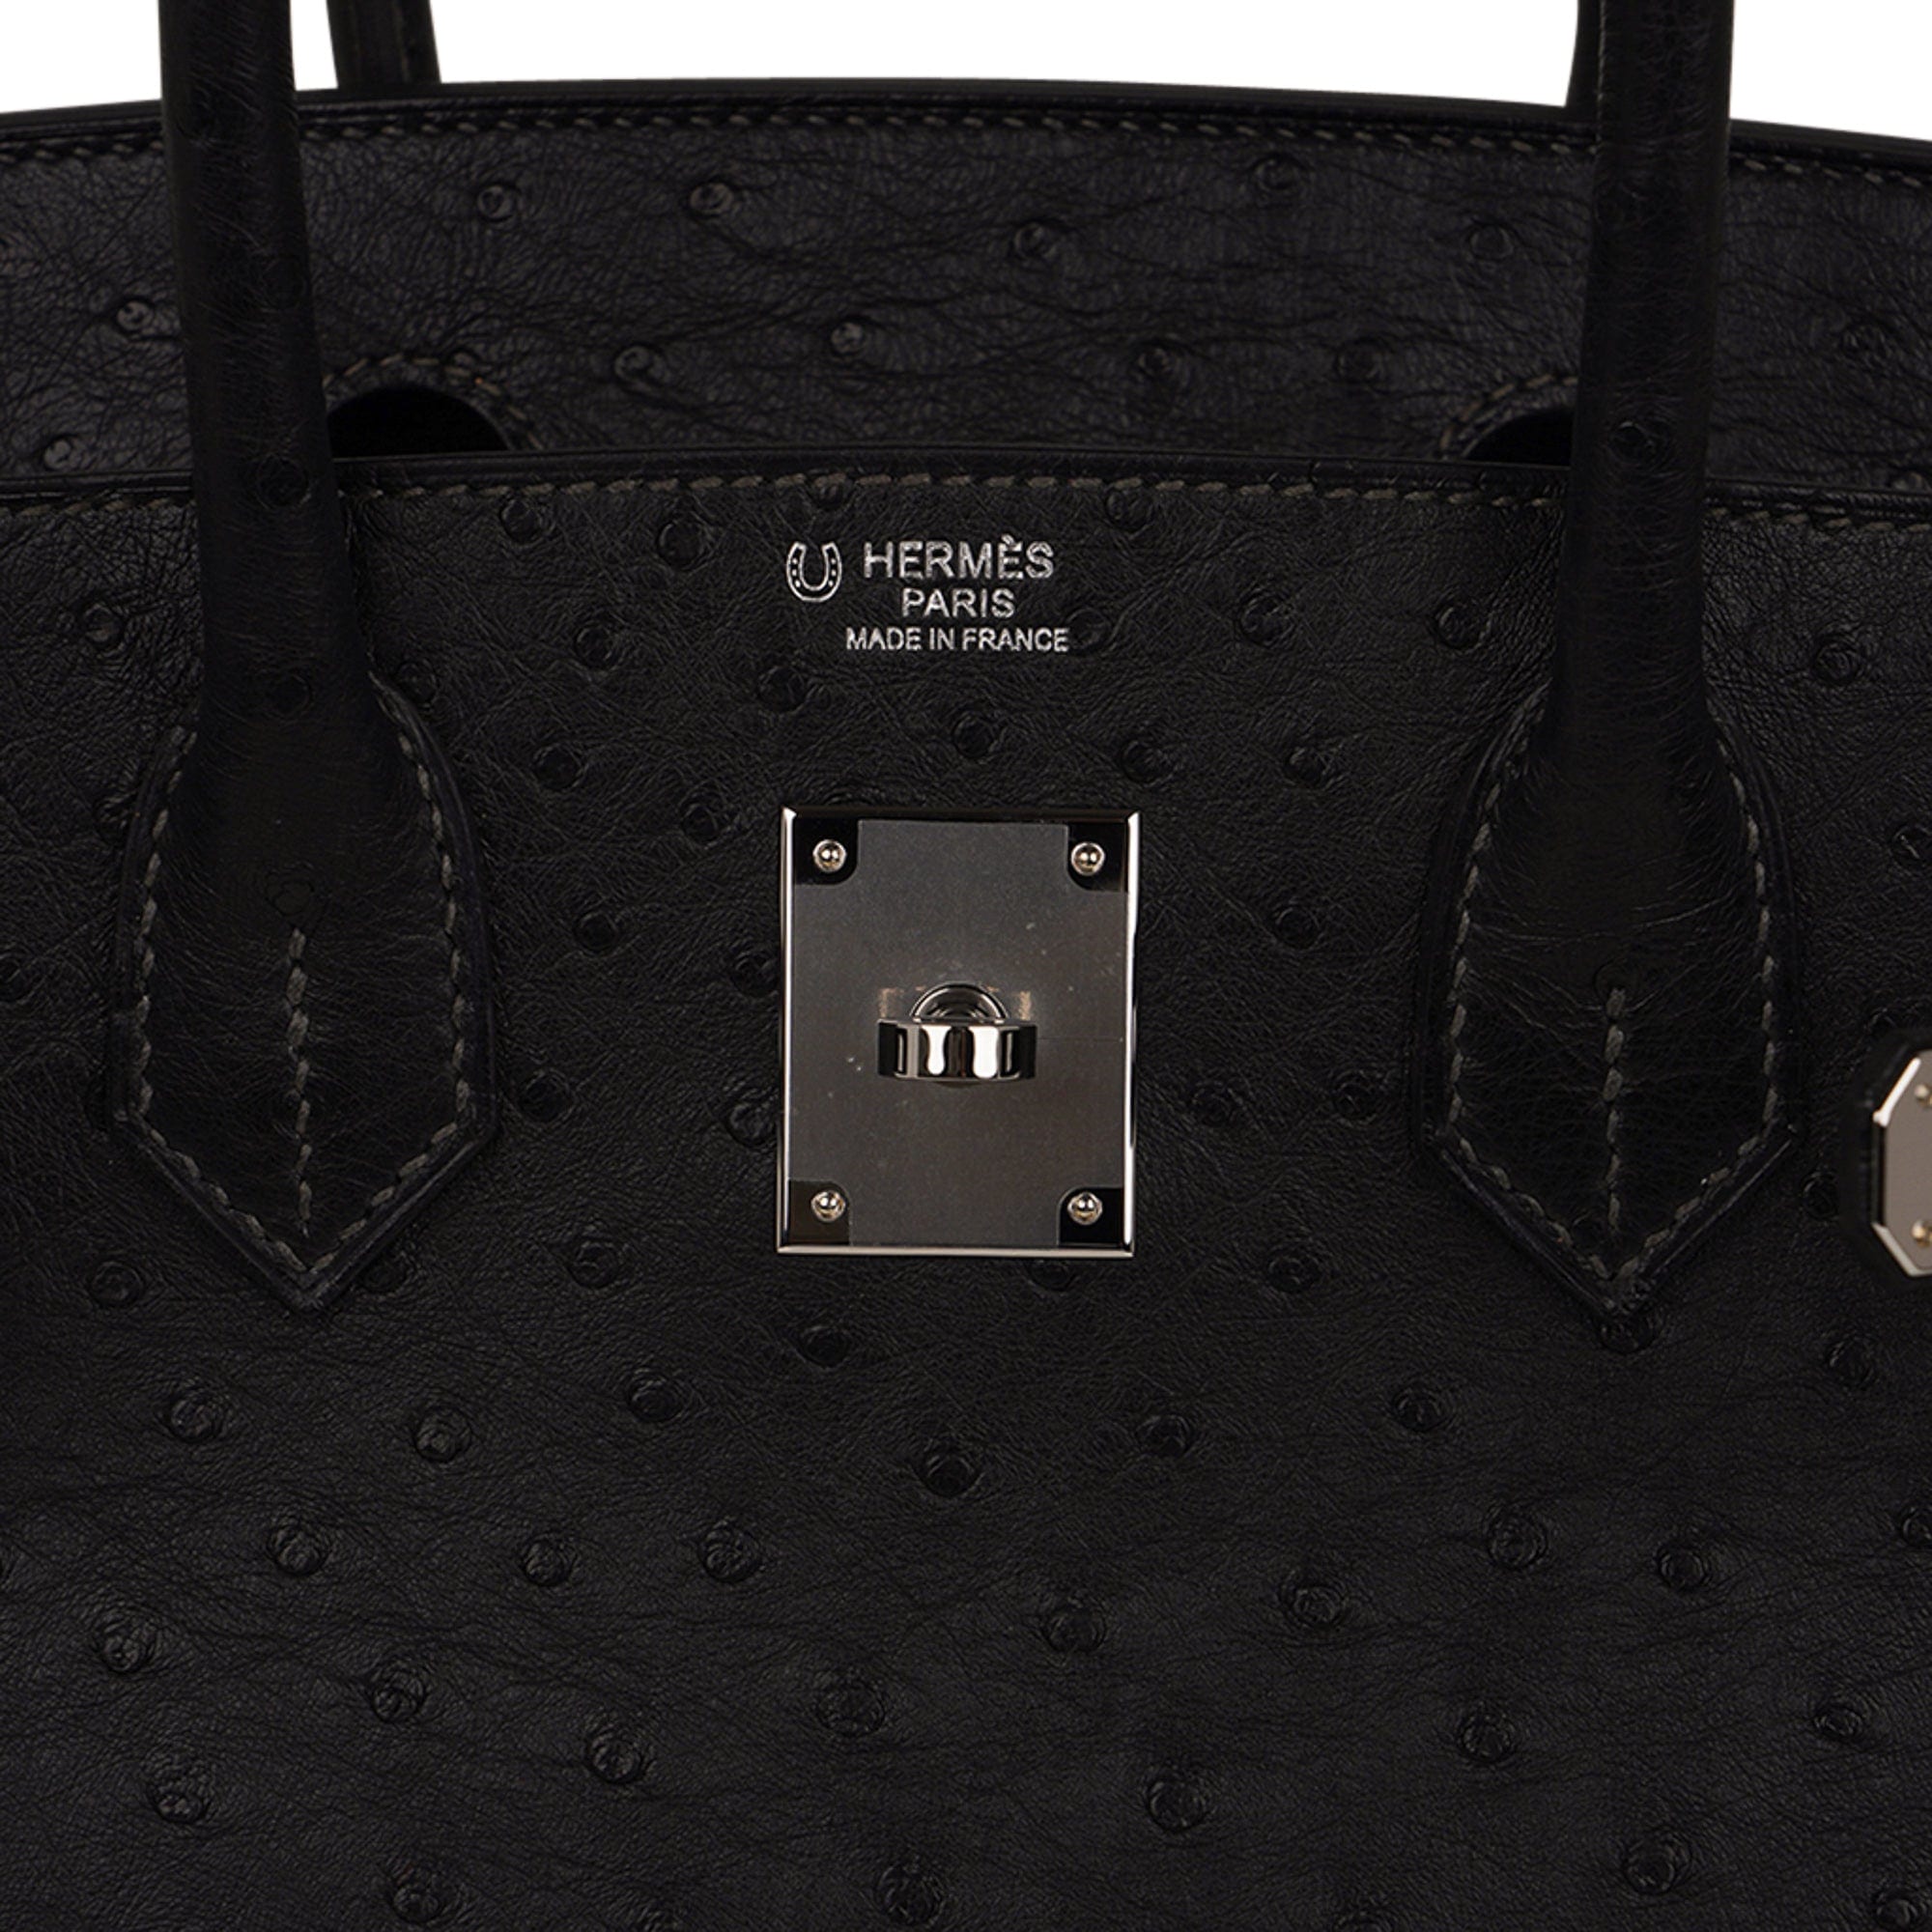 Hermès Birkin 30 cm Handbag in Grey Ostrich Leather